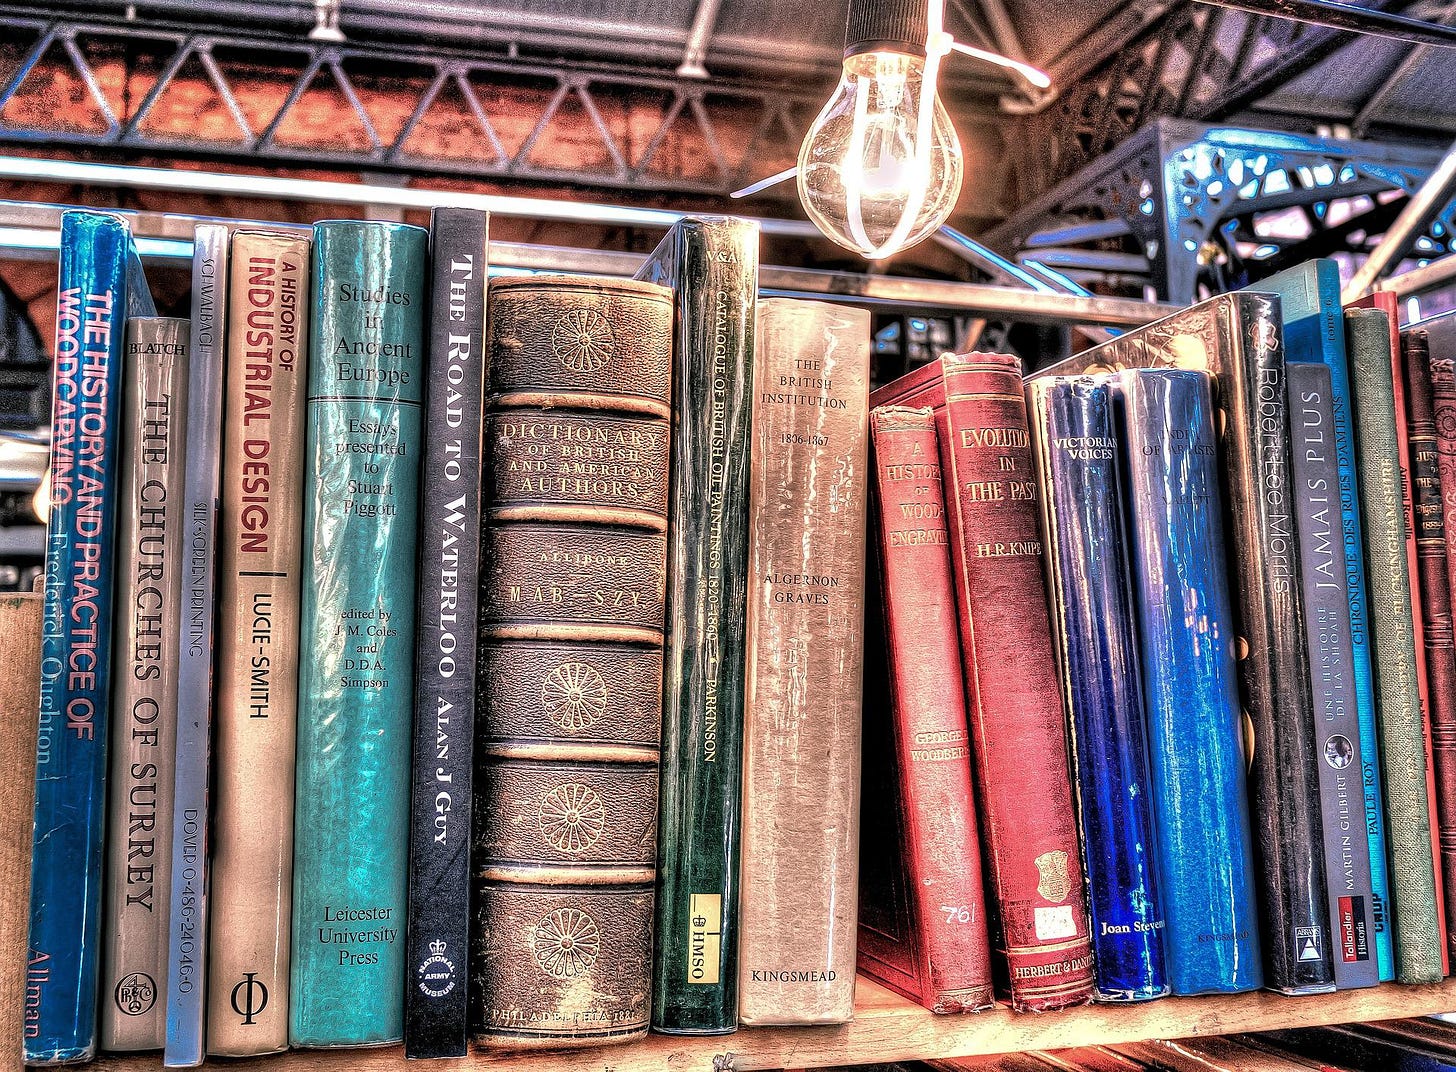 A shelf of colorful books on a wooden shelf, lit by an Edison-style lightbulb.